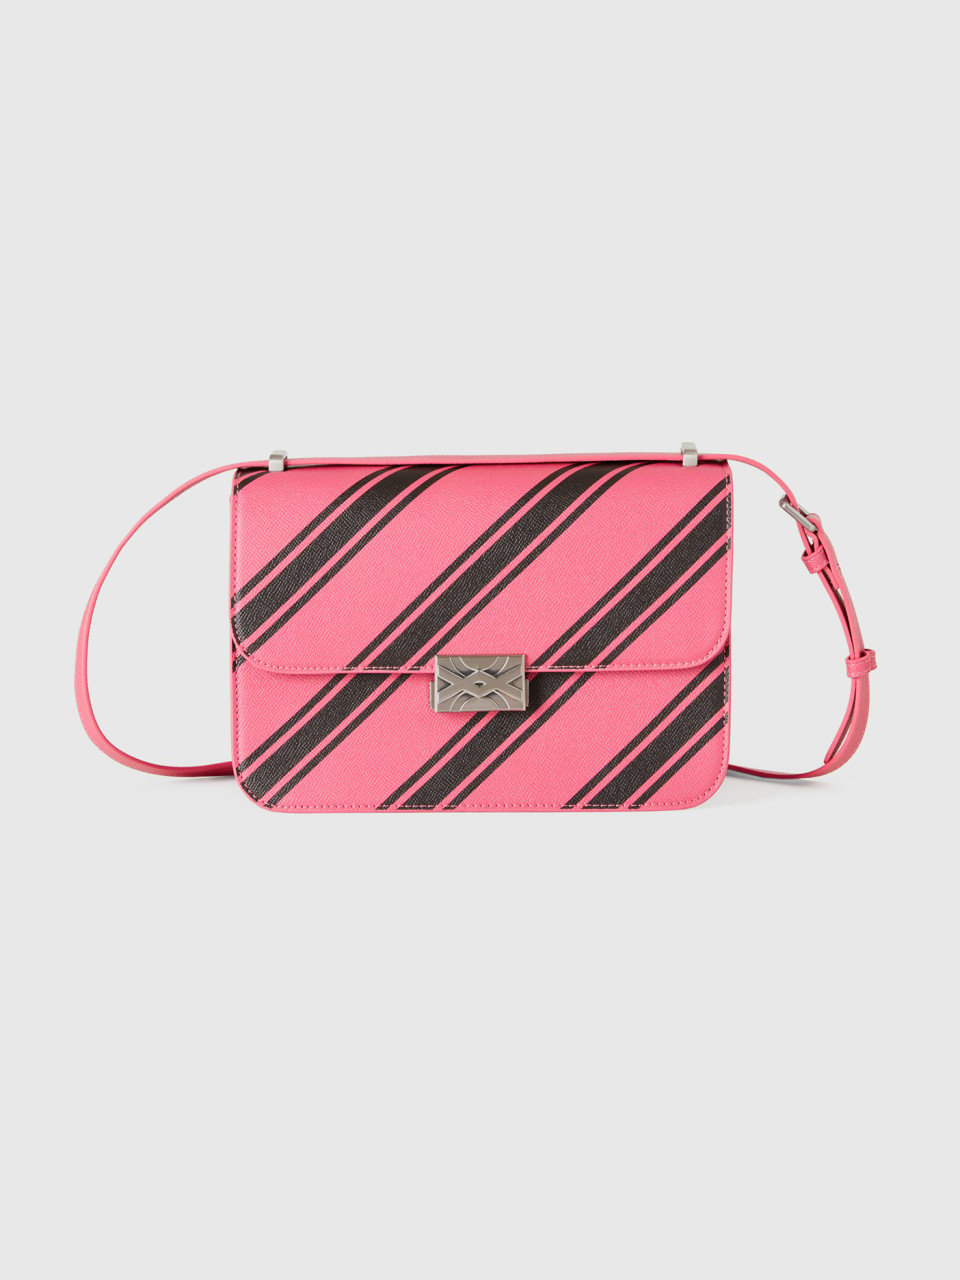 Benetton, Pink Bag With Regimental Stripes, Pink, Women